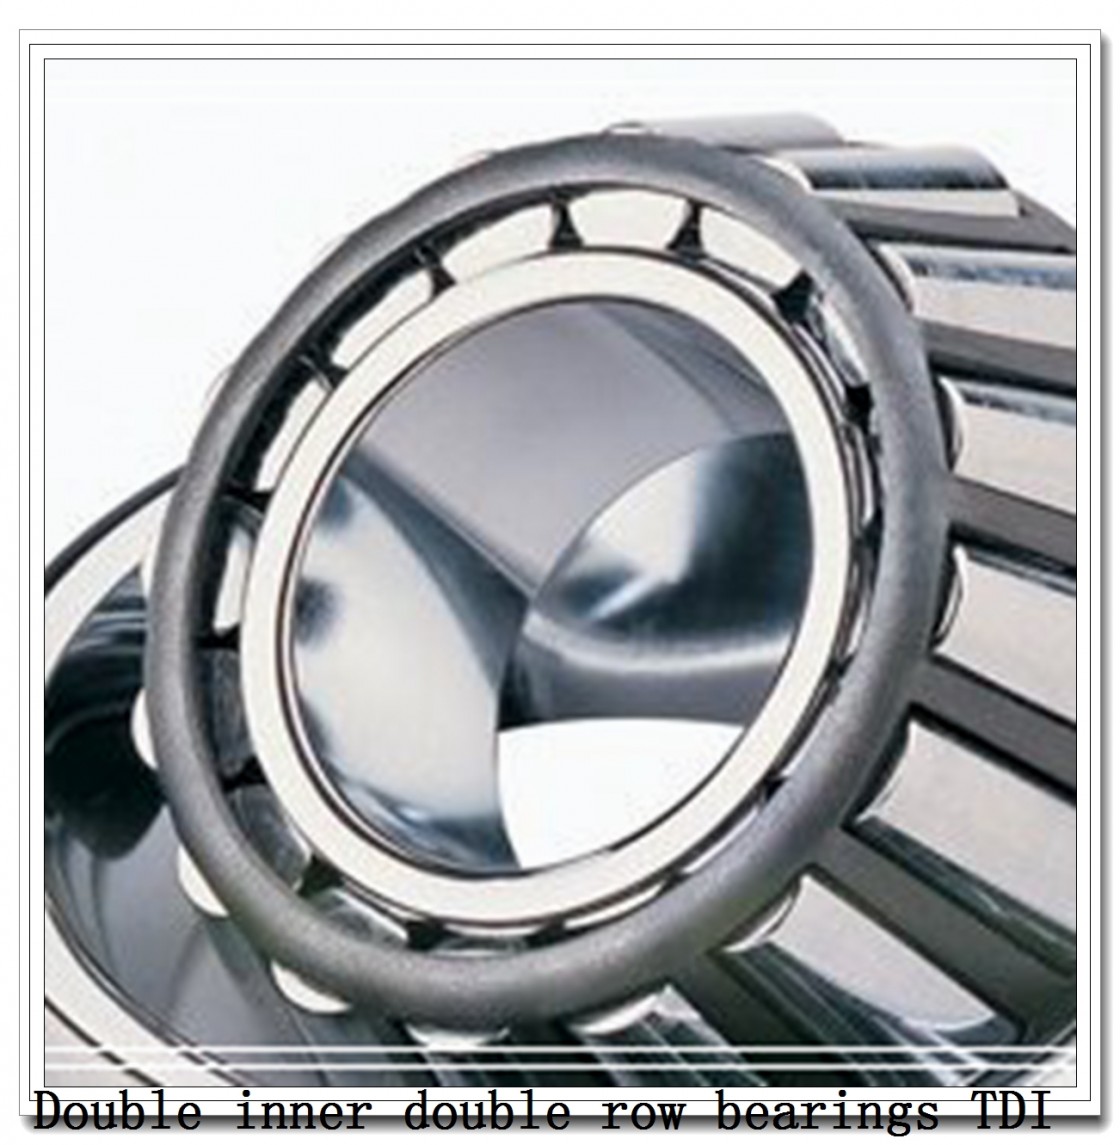 150TDO225-3 Double inner double row bearings TDI